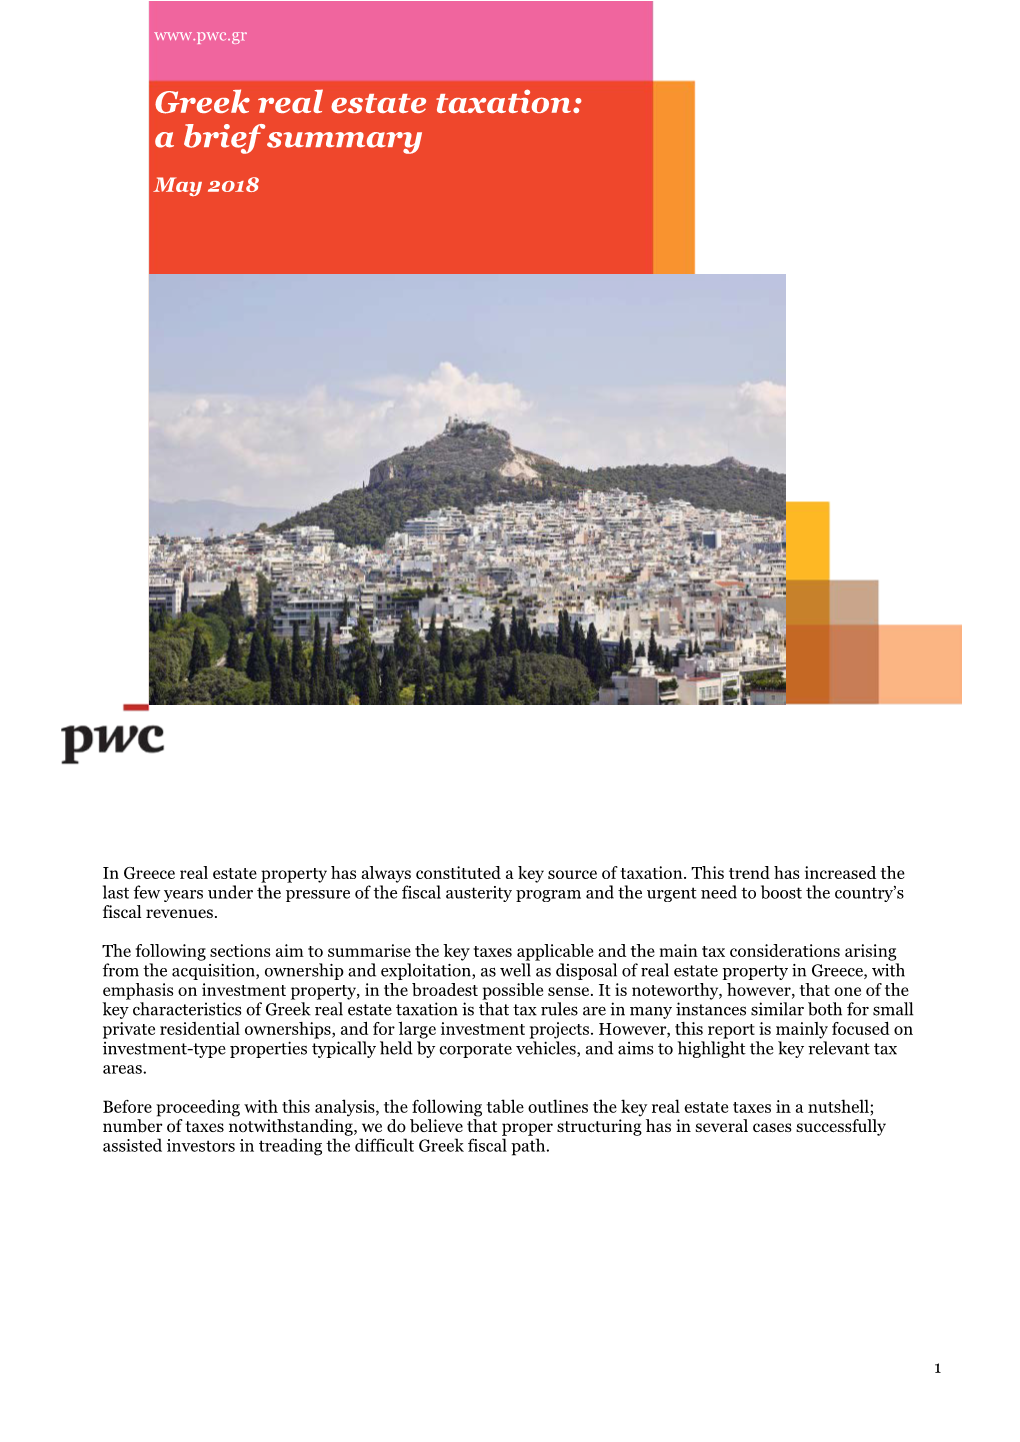 Greek Real Estate Taxation: a Brief Summary